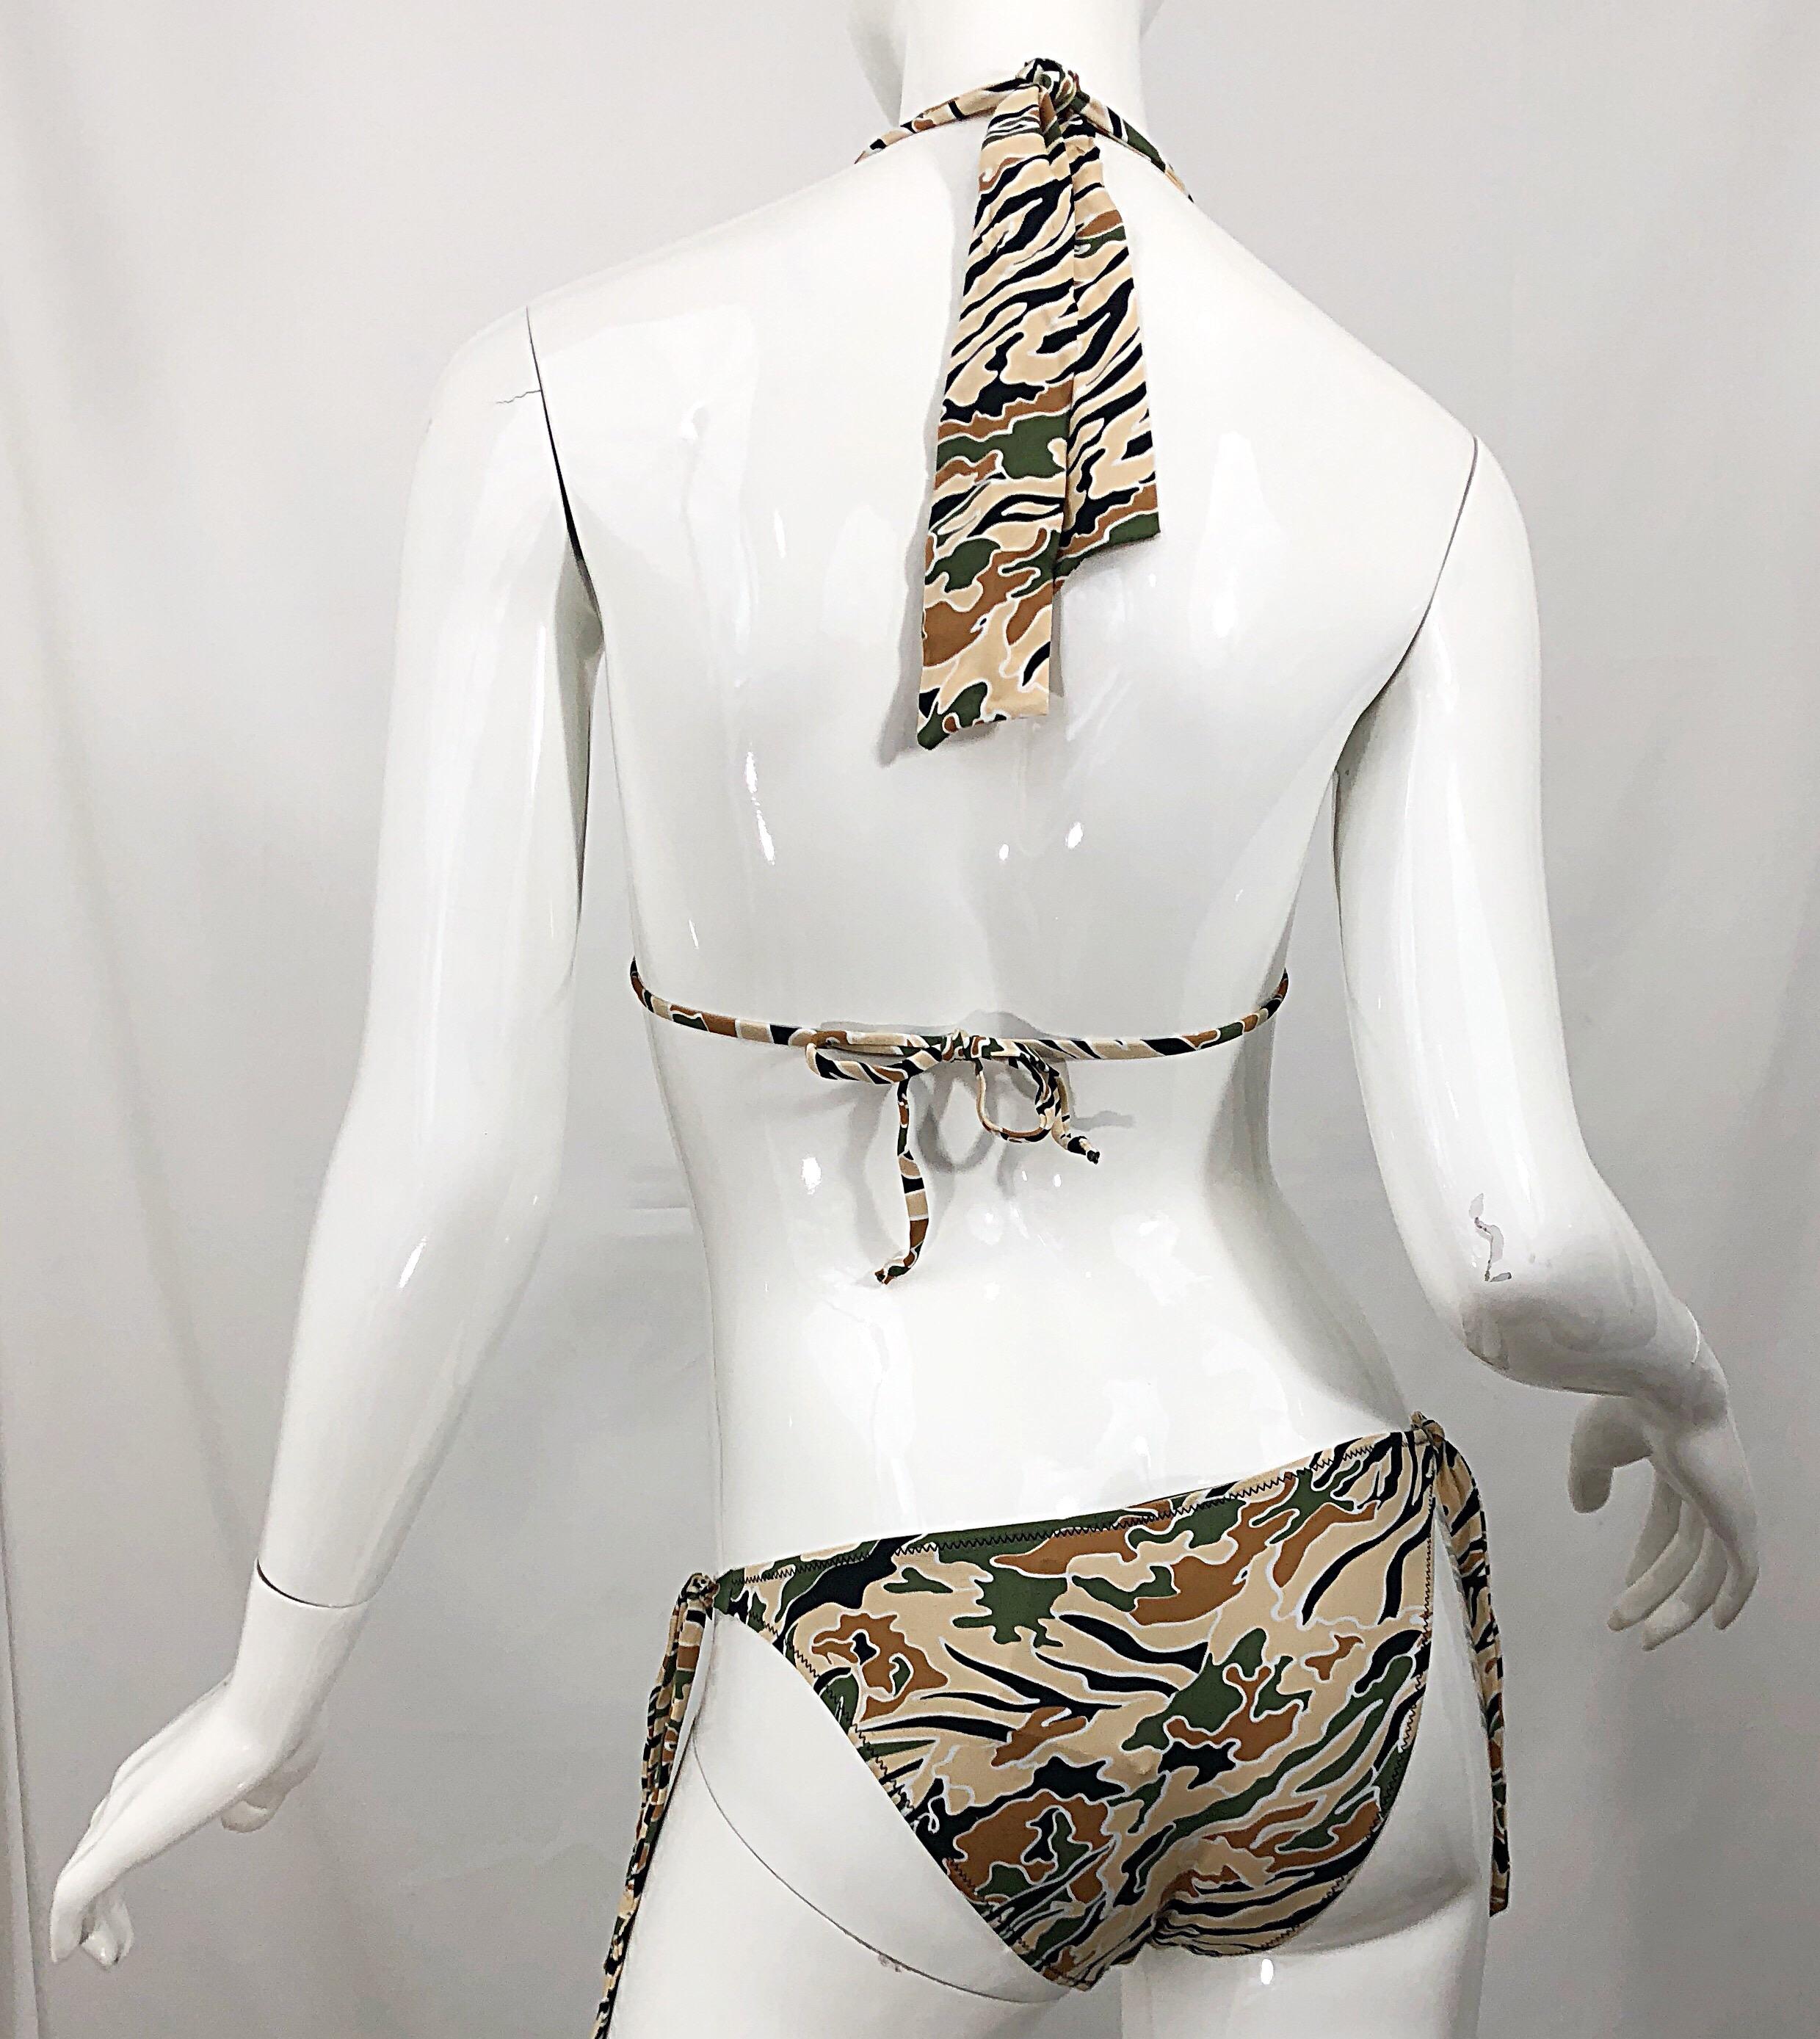 NWT La Perla Camouflage Traingle Top Low Rise Two Piece Bikini Swimsuit 2